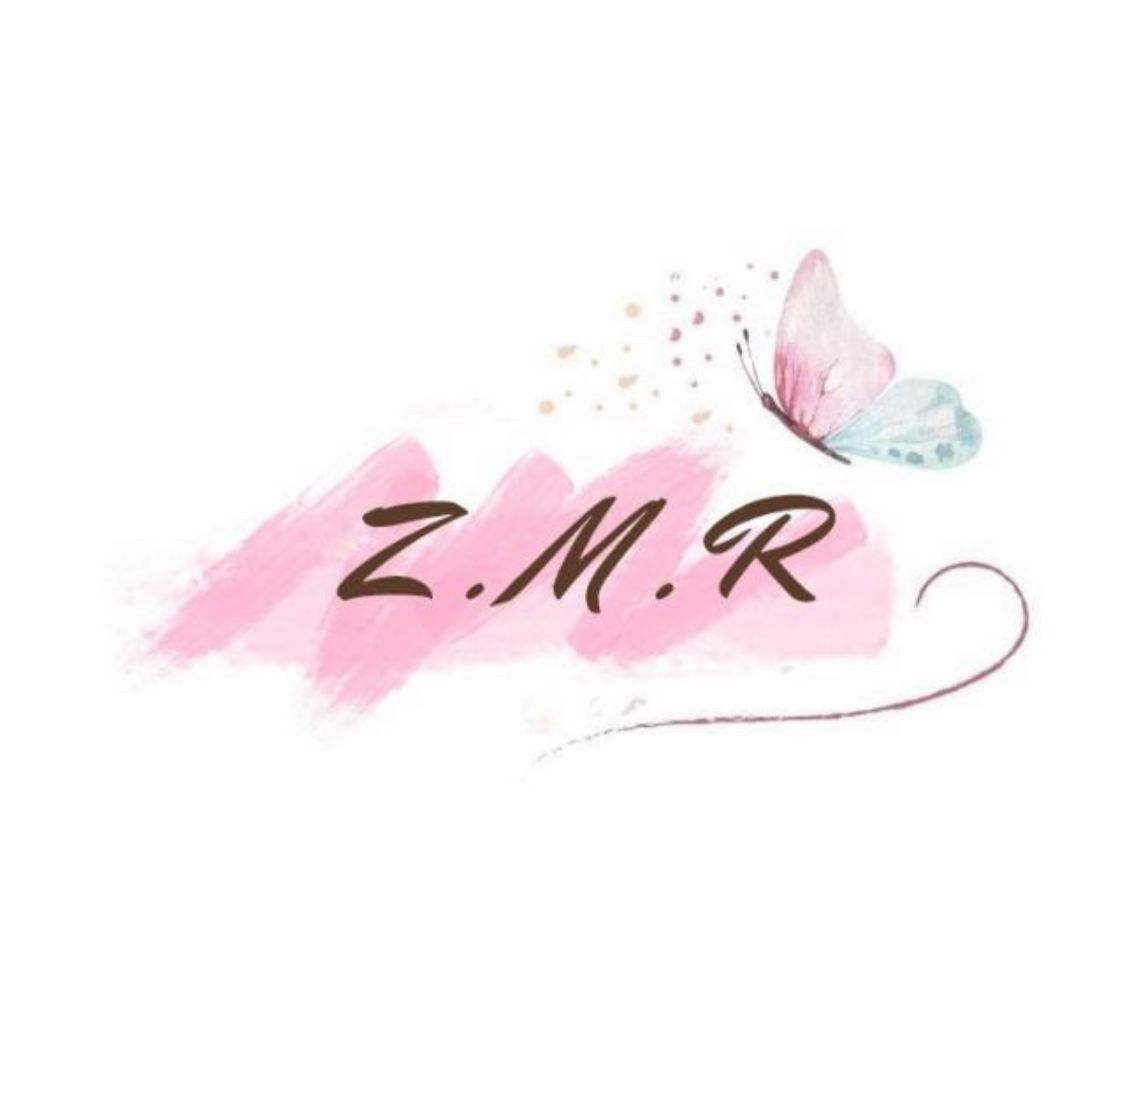 Z.M.R